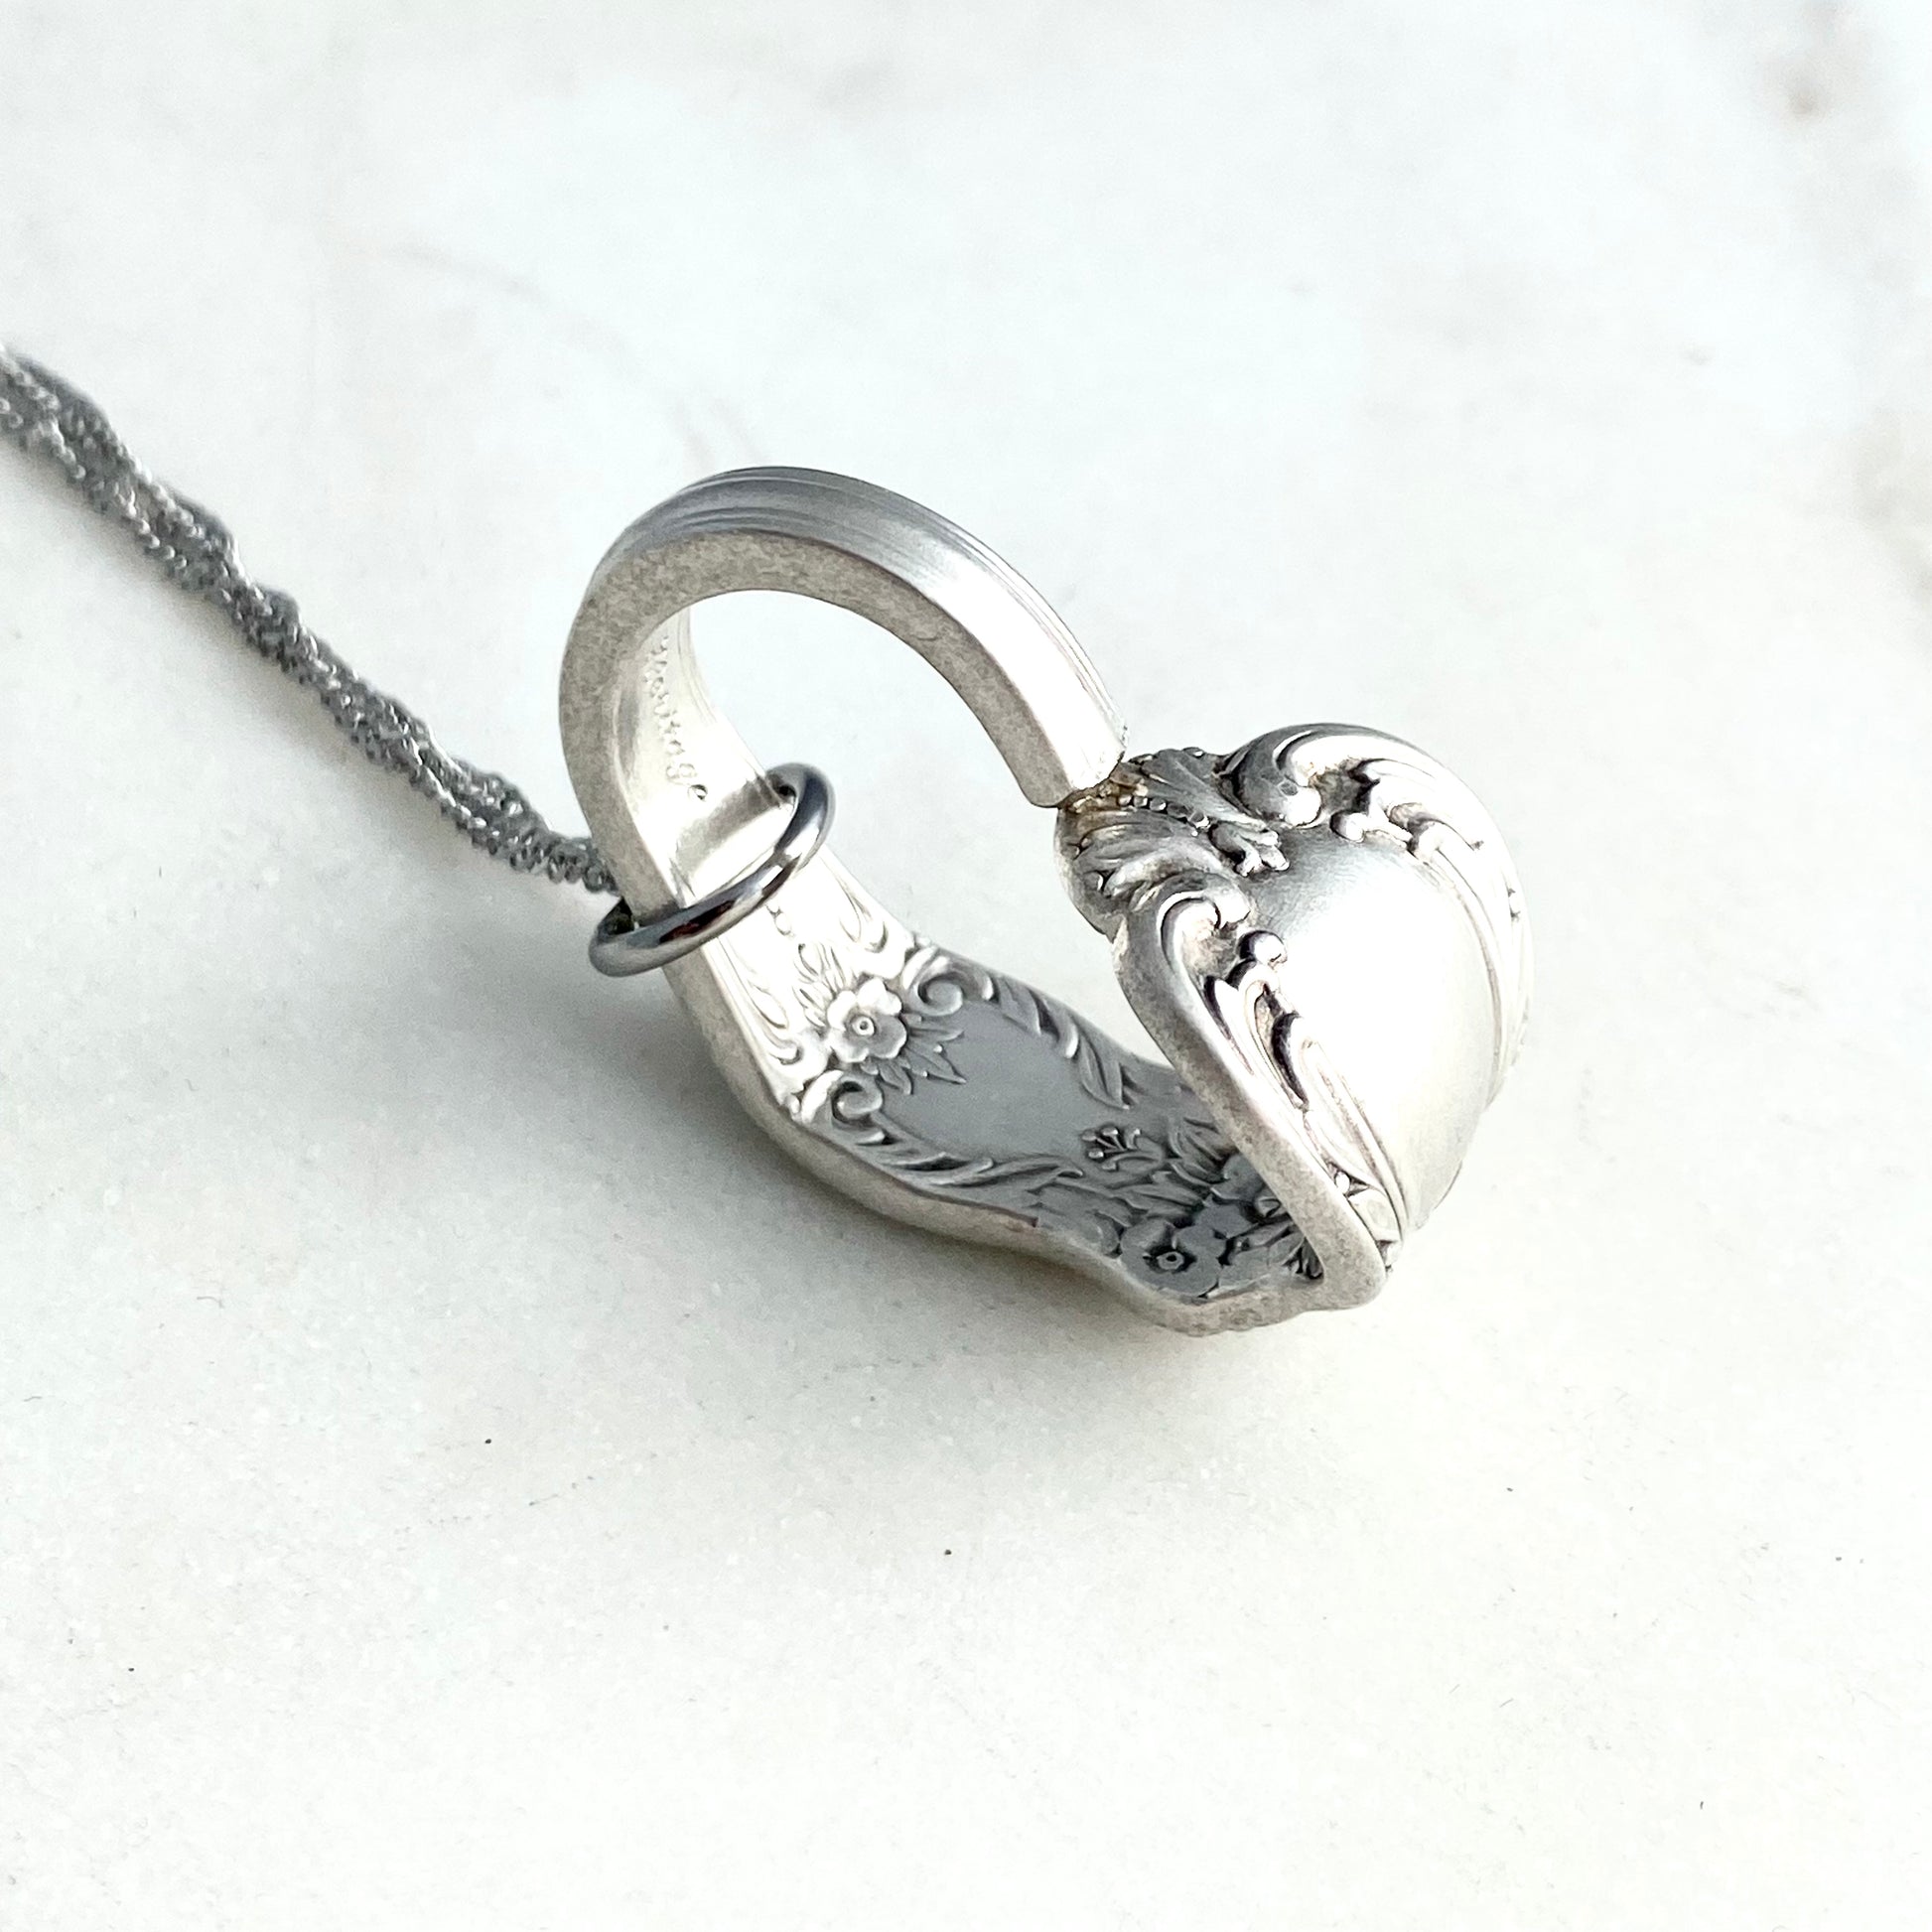 MINI Heritage 1953, Mini Floating Heart, Vintage Spoon Jewelry Hearts callistafaye   